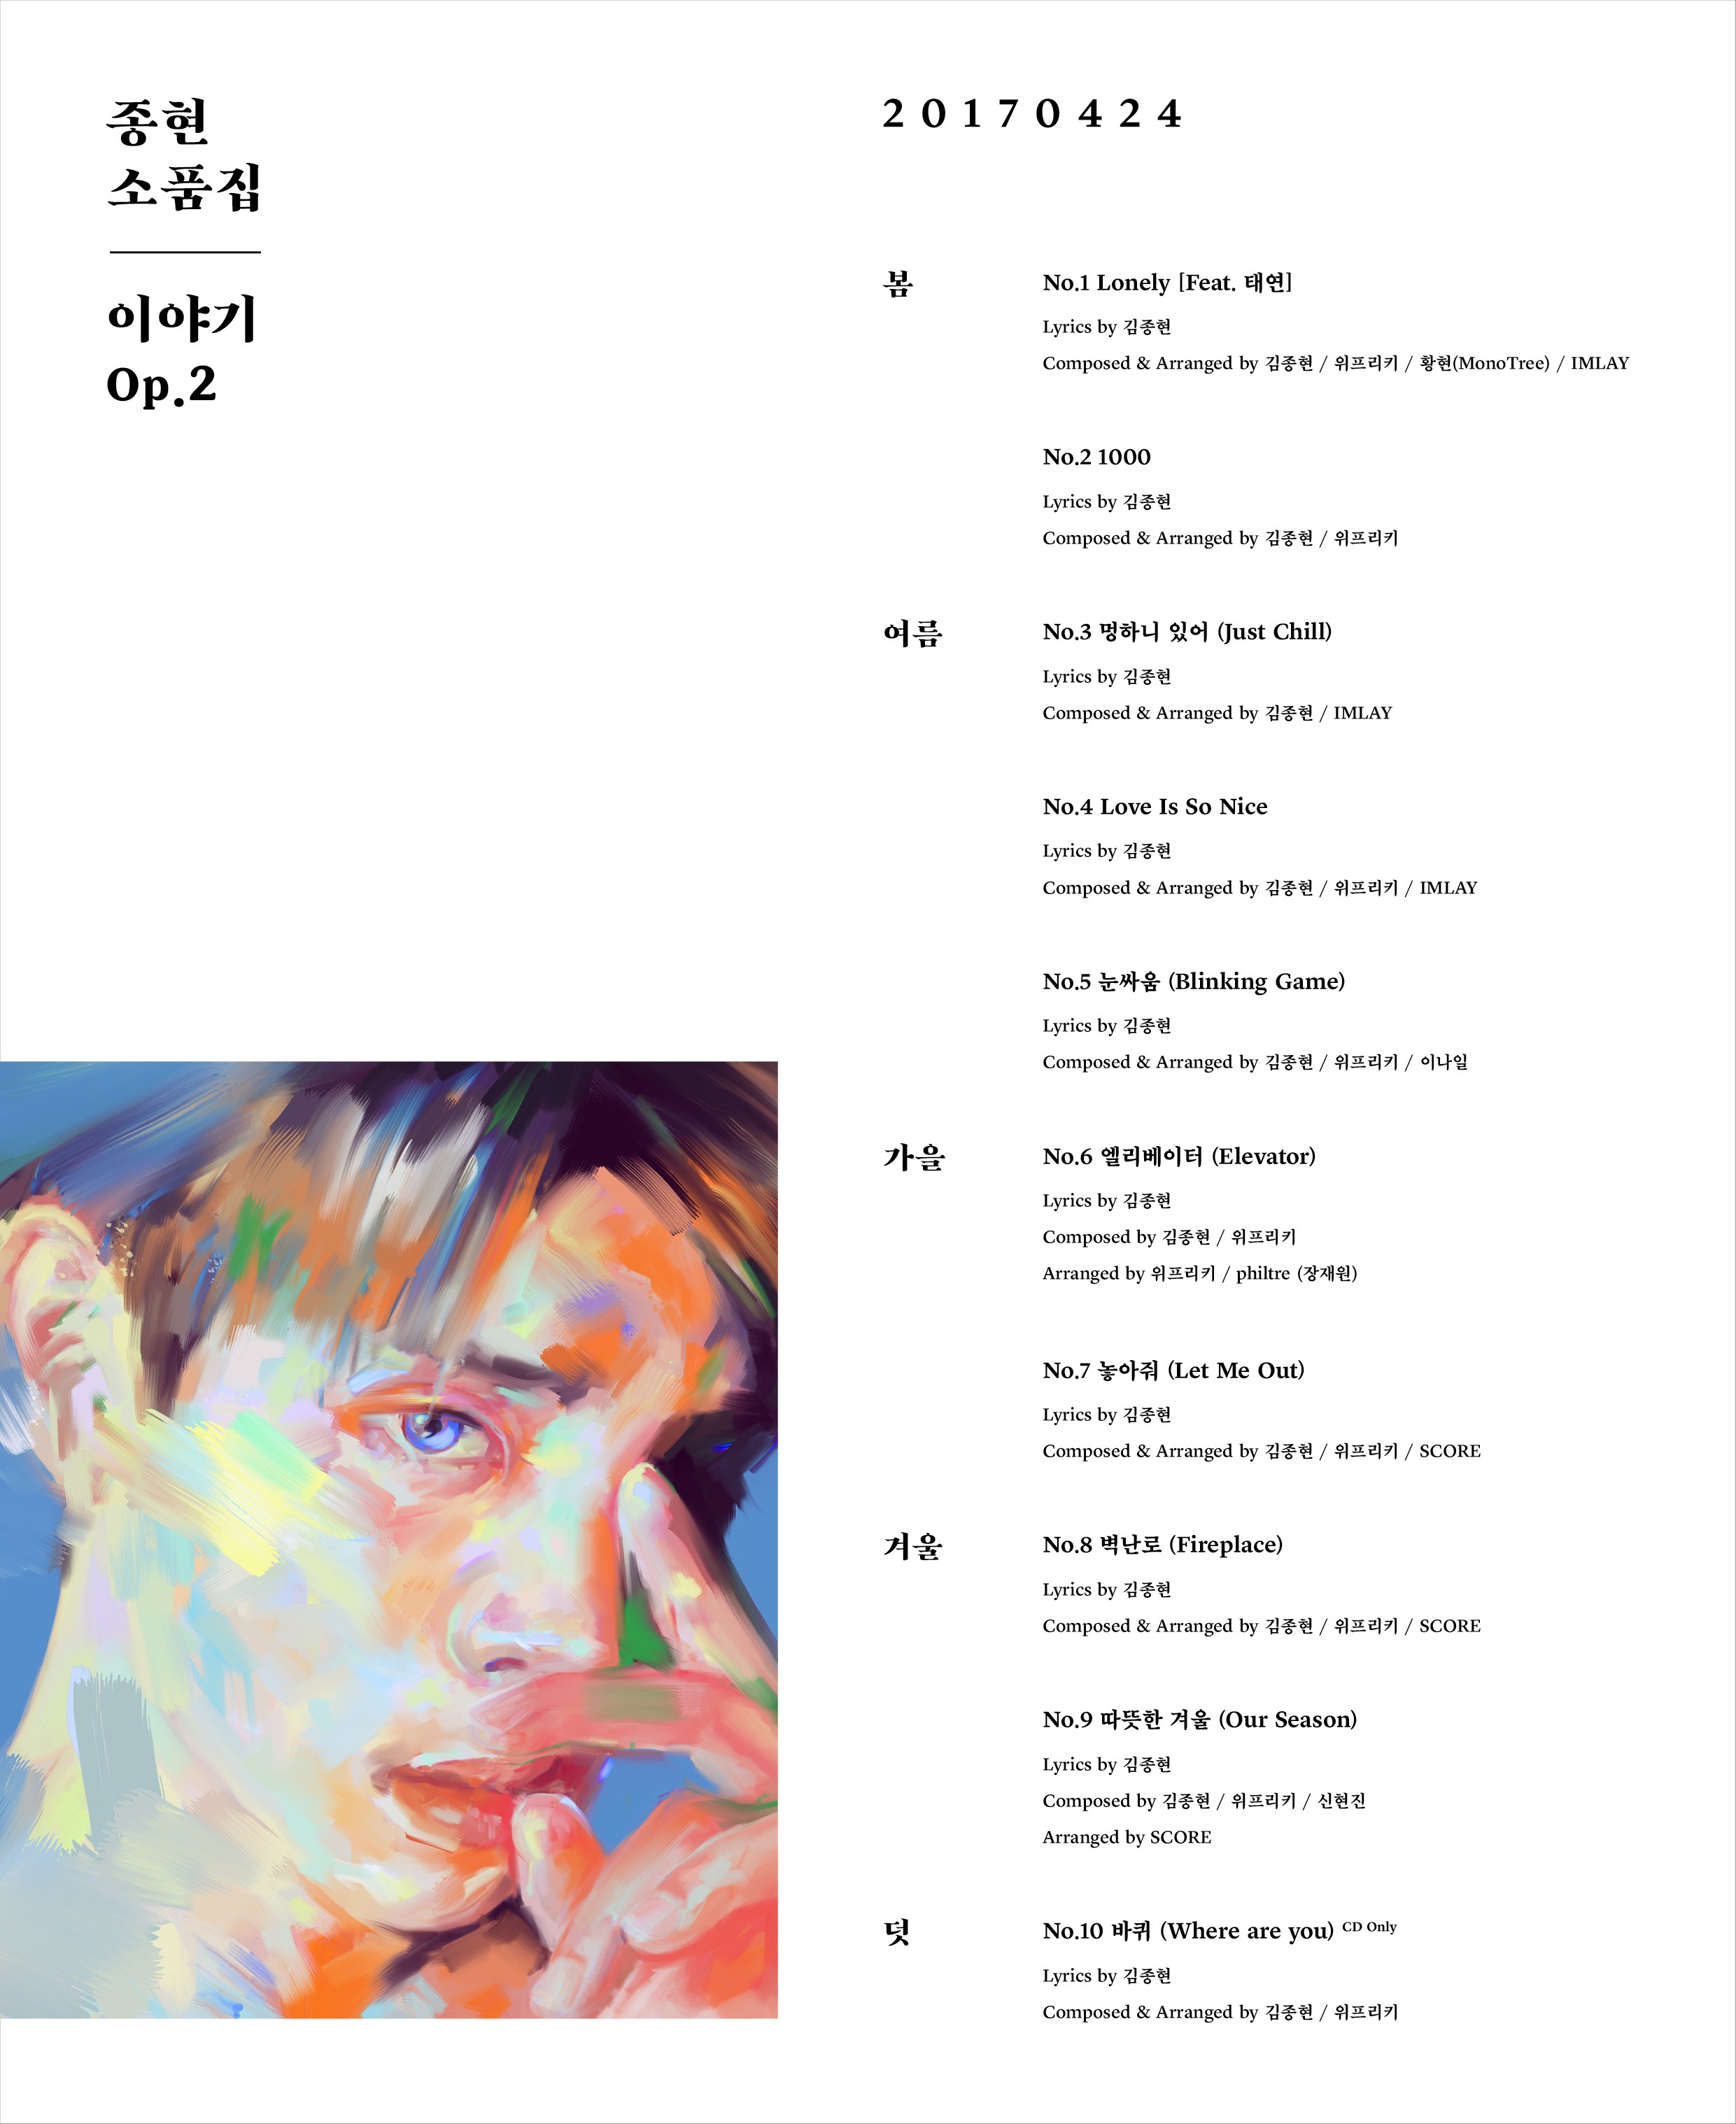 [Tracklist] JONGHYUN - Story Op.2